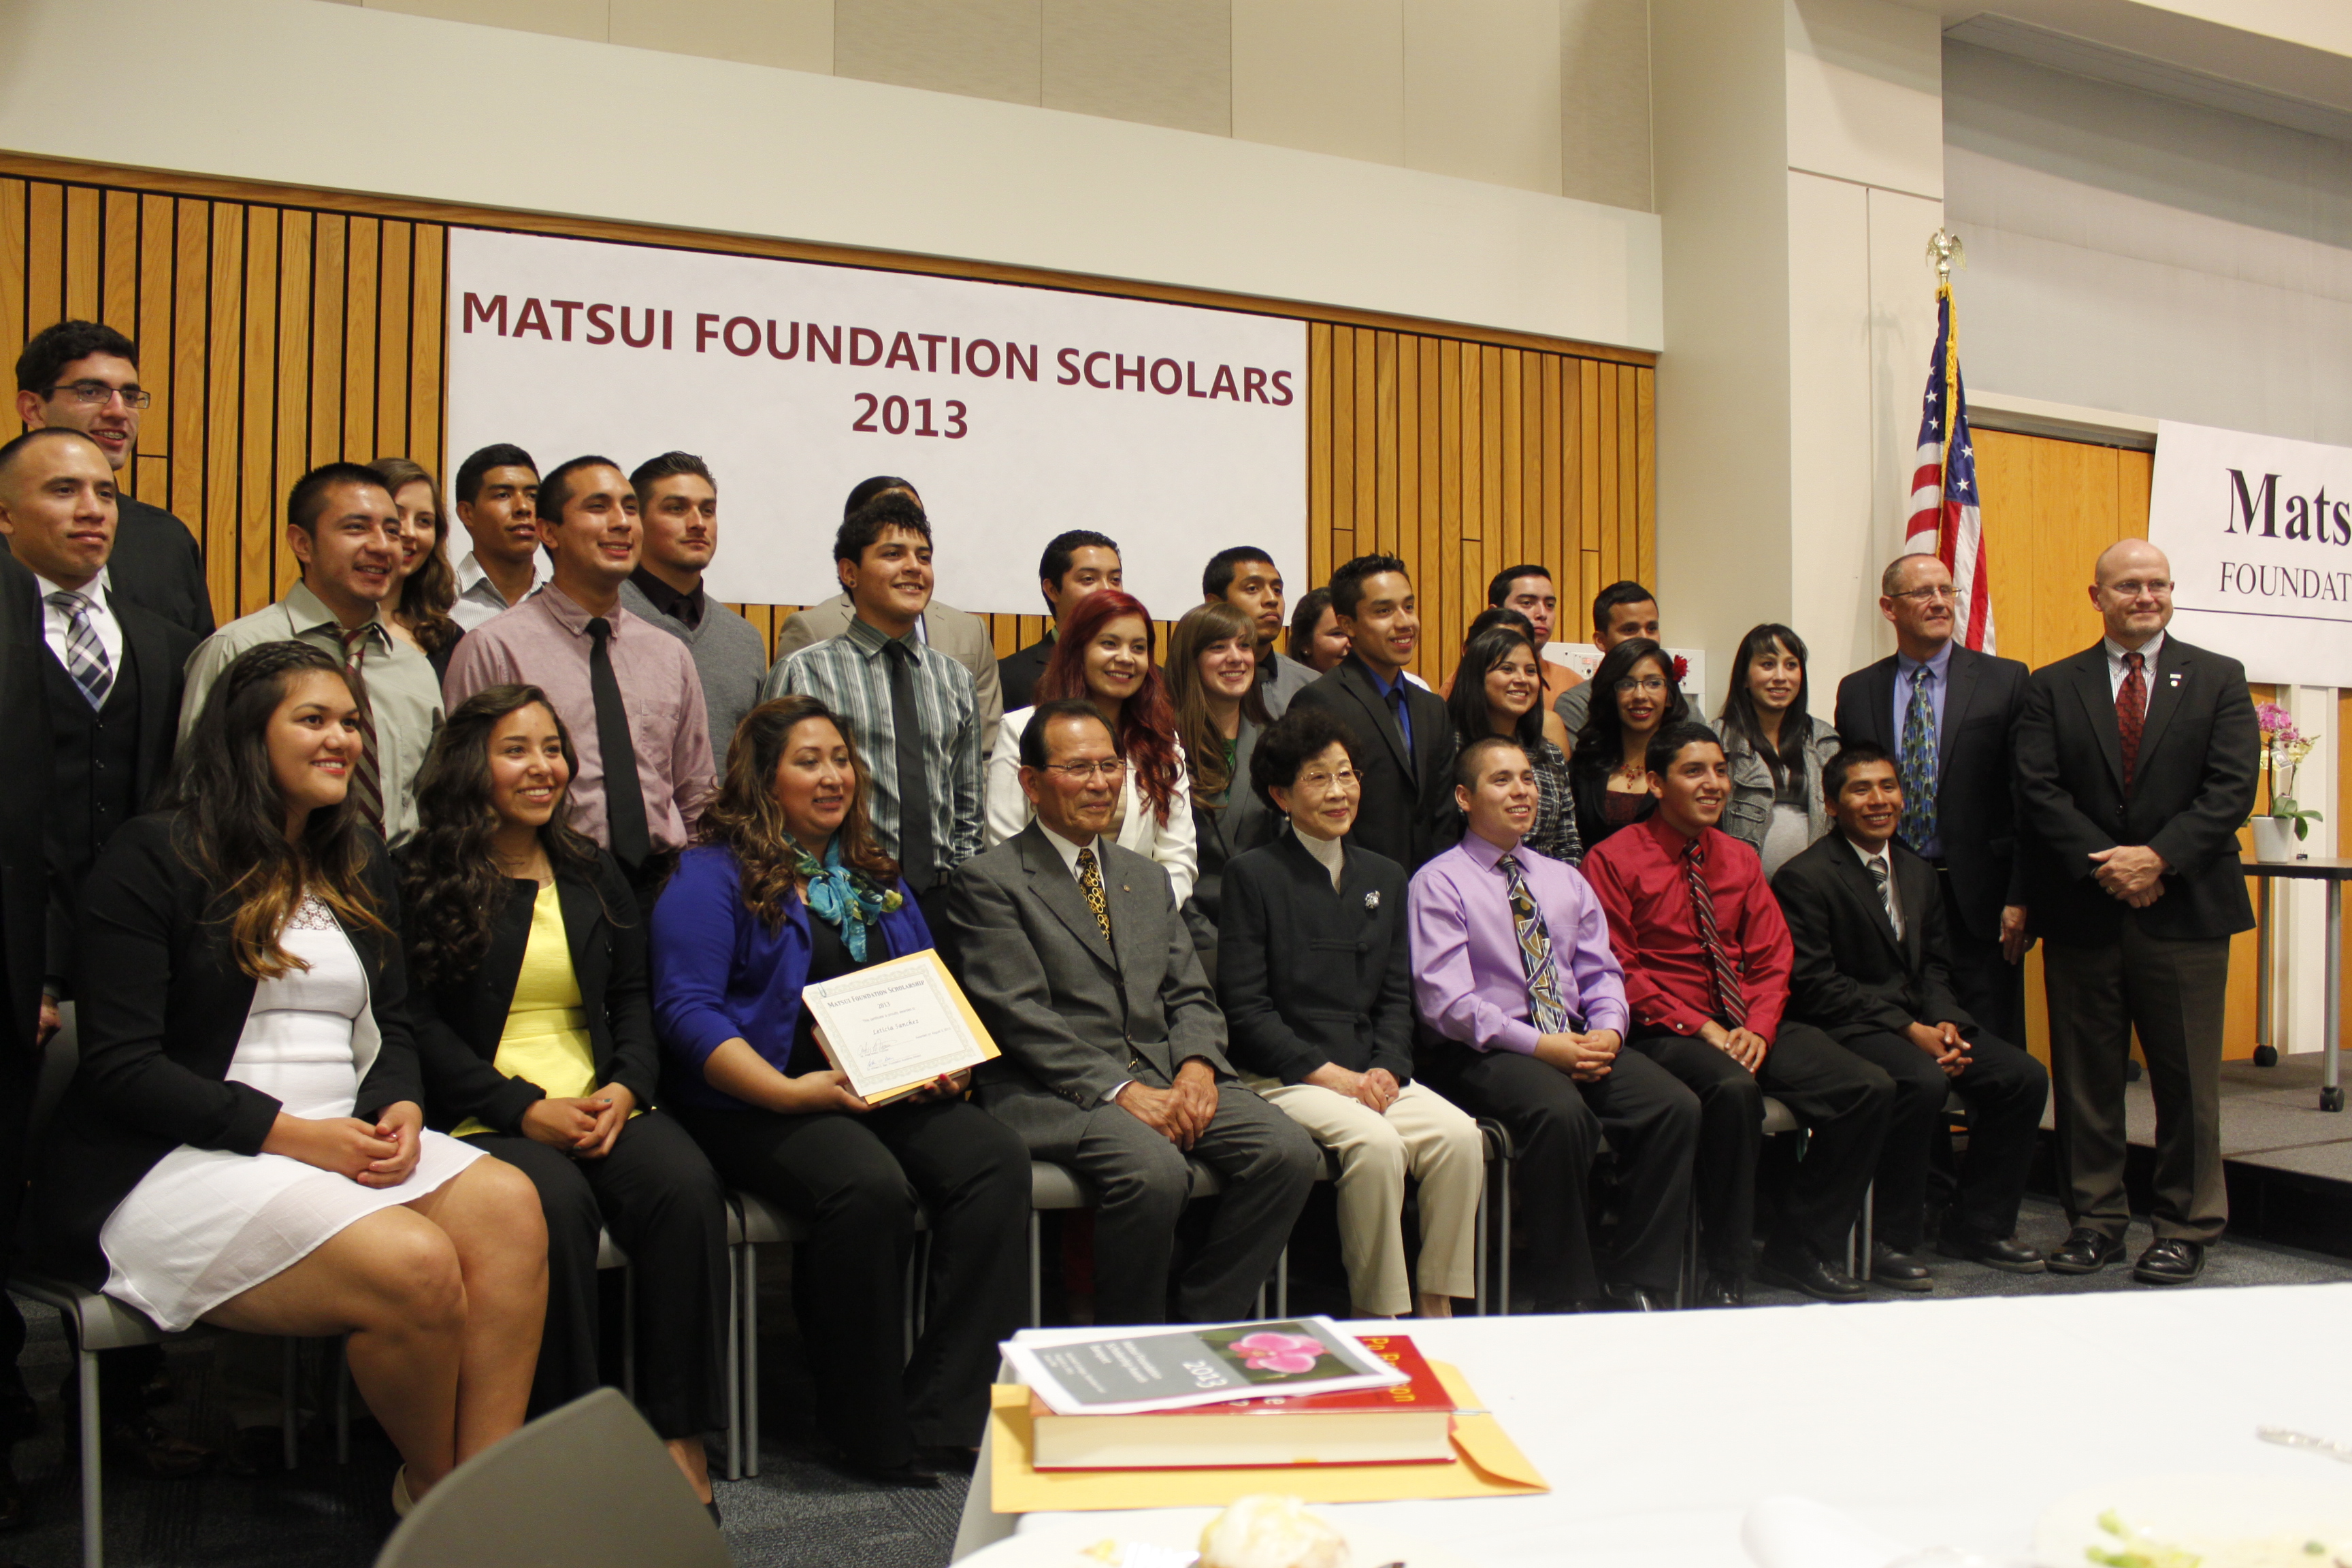 Matsui Foundation Scholars